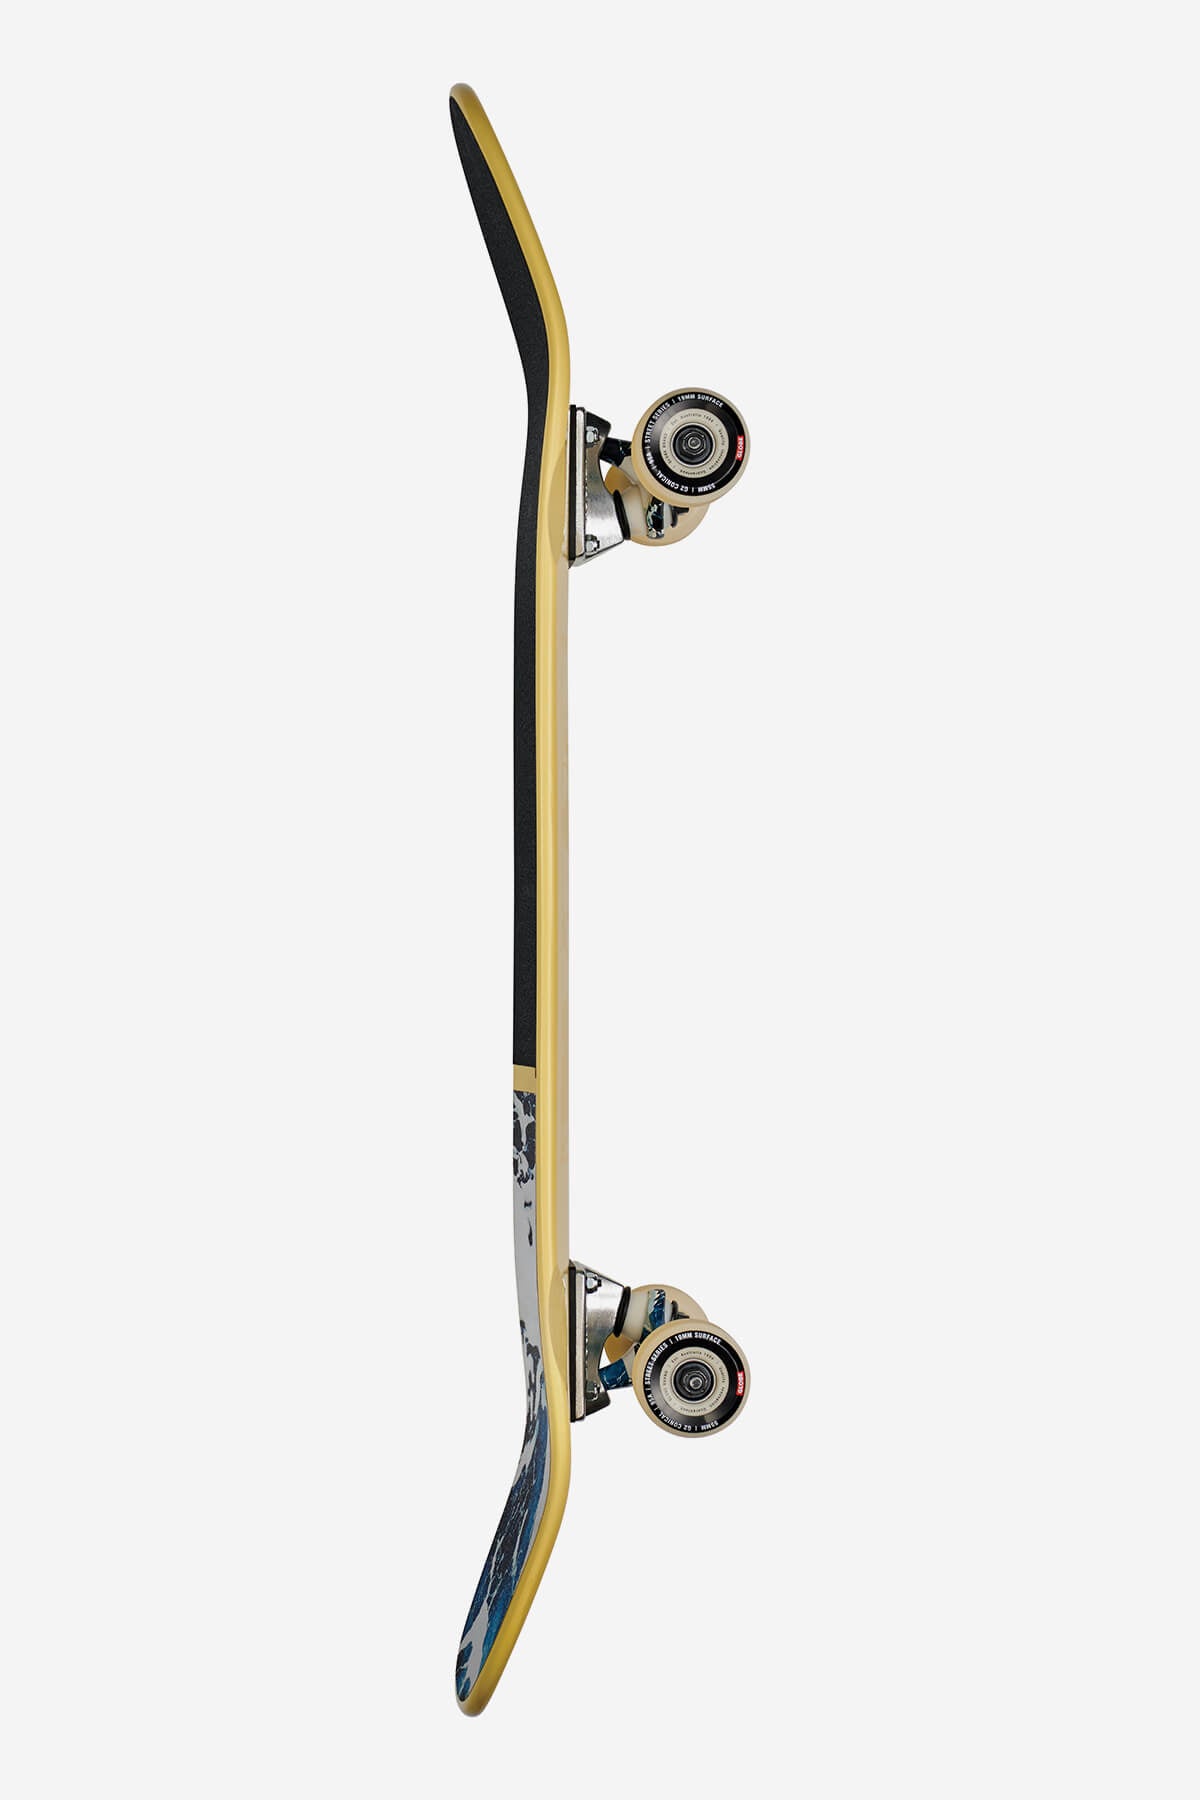 Globe - Shooter - Yellow/Comehell - 8,625" completo Skateboard